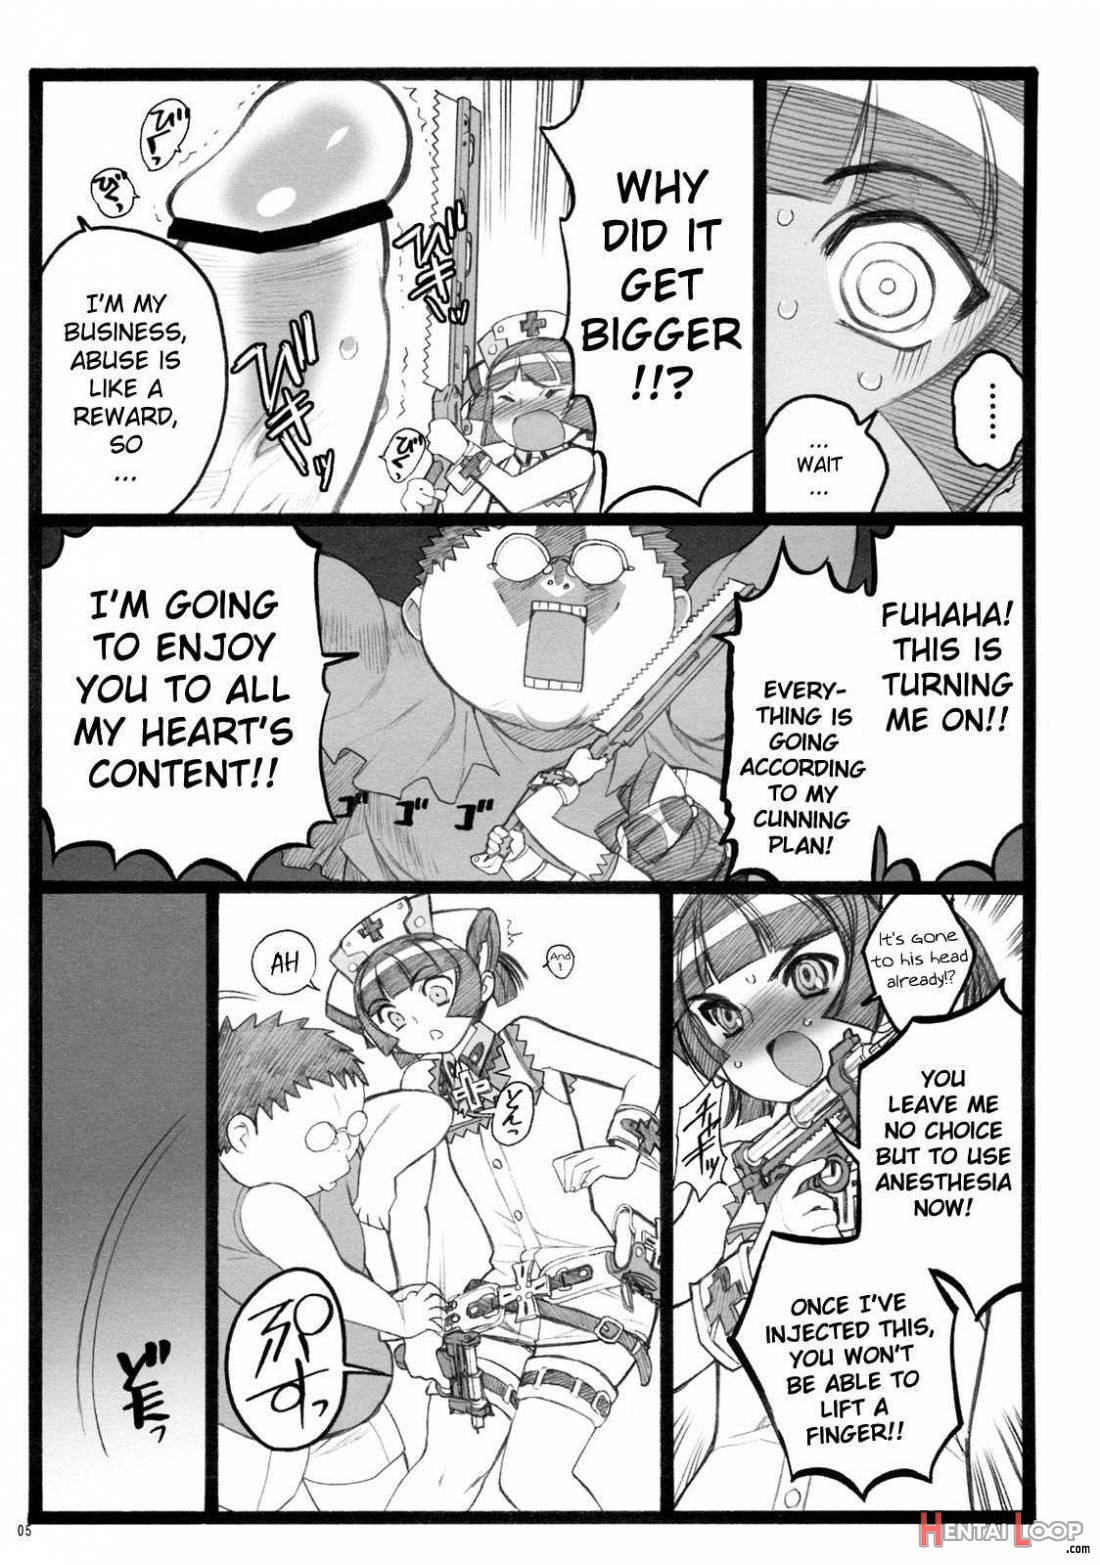 Hyper Nurse Painkiller Kotone-chan page 4